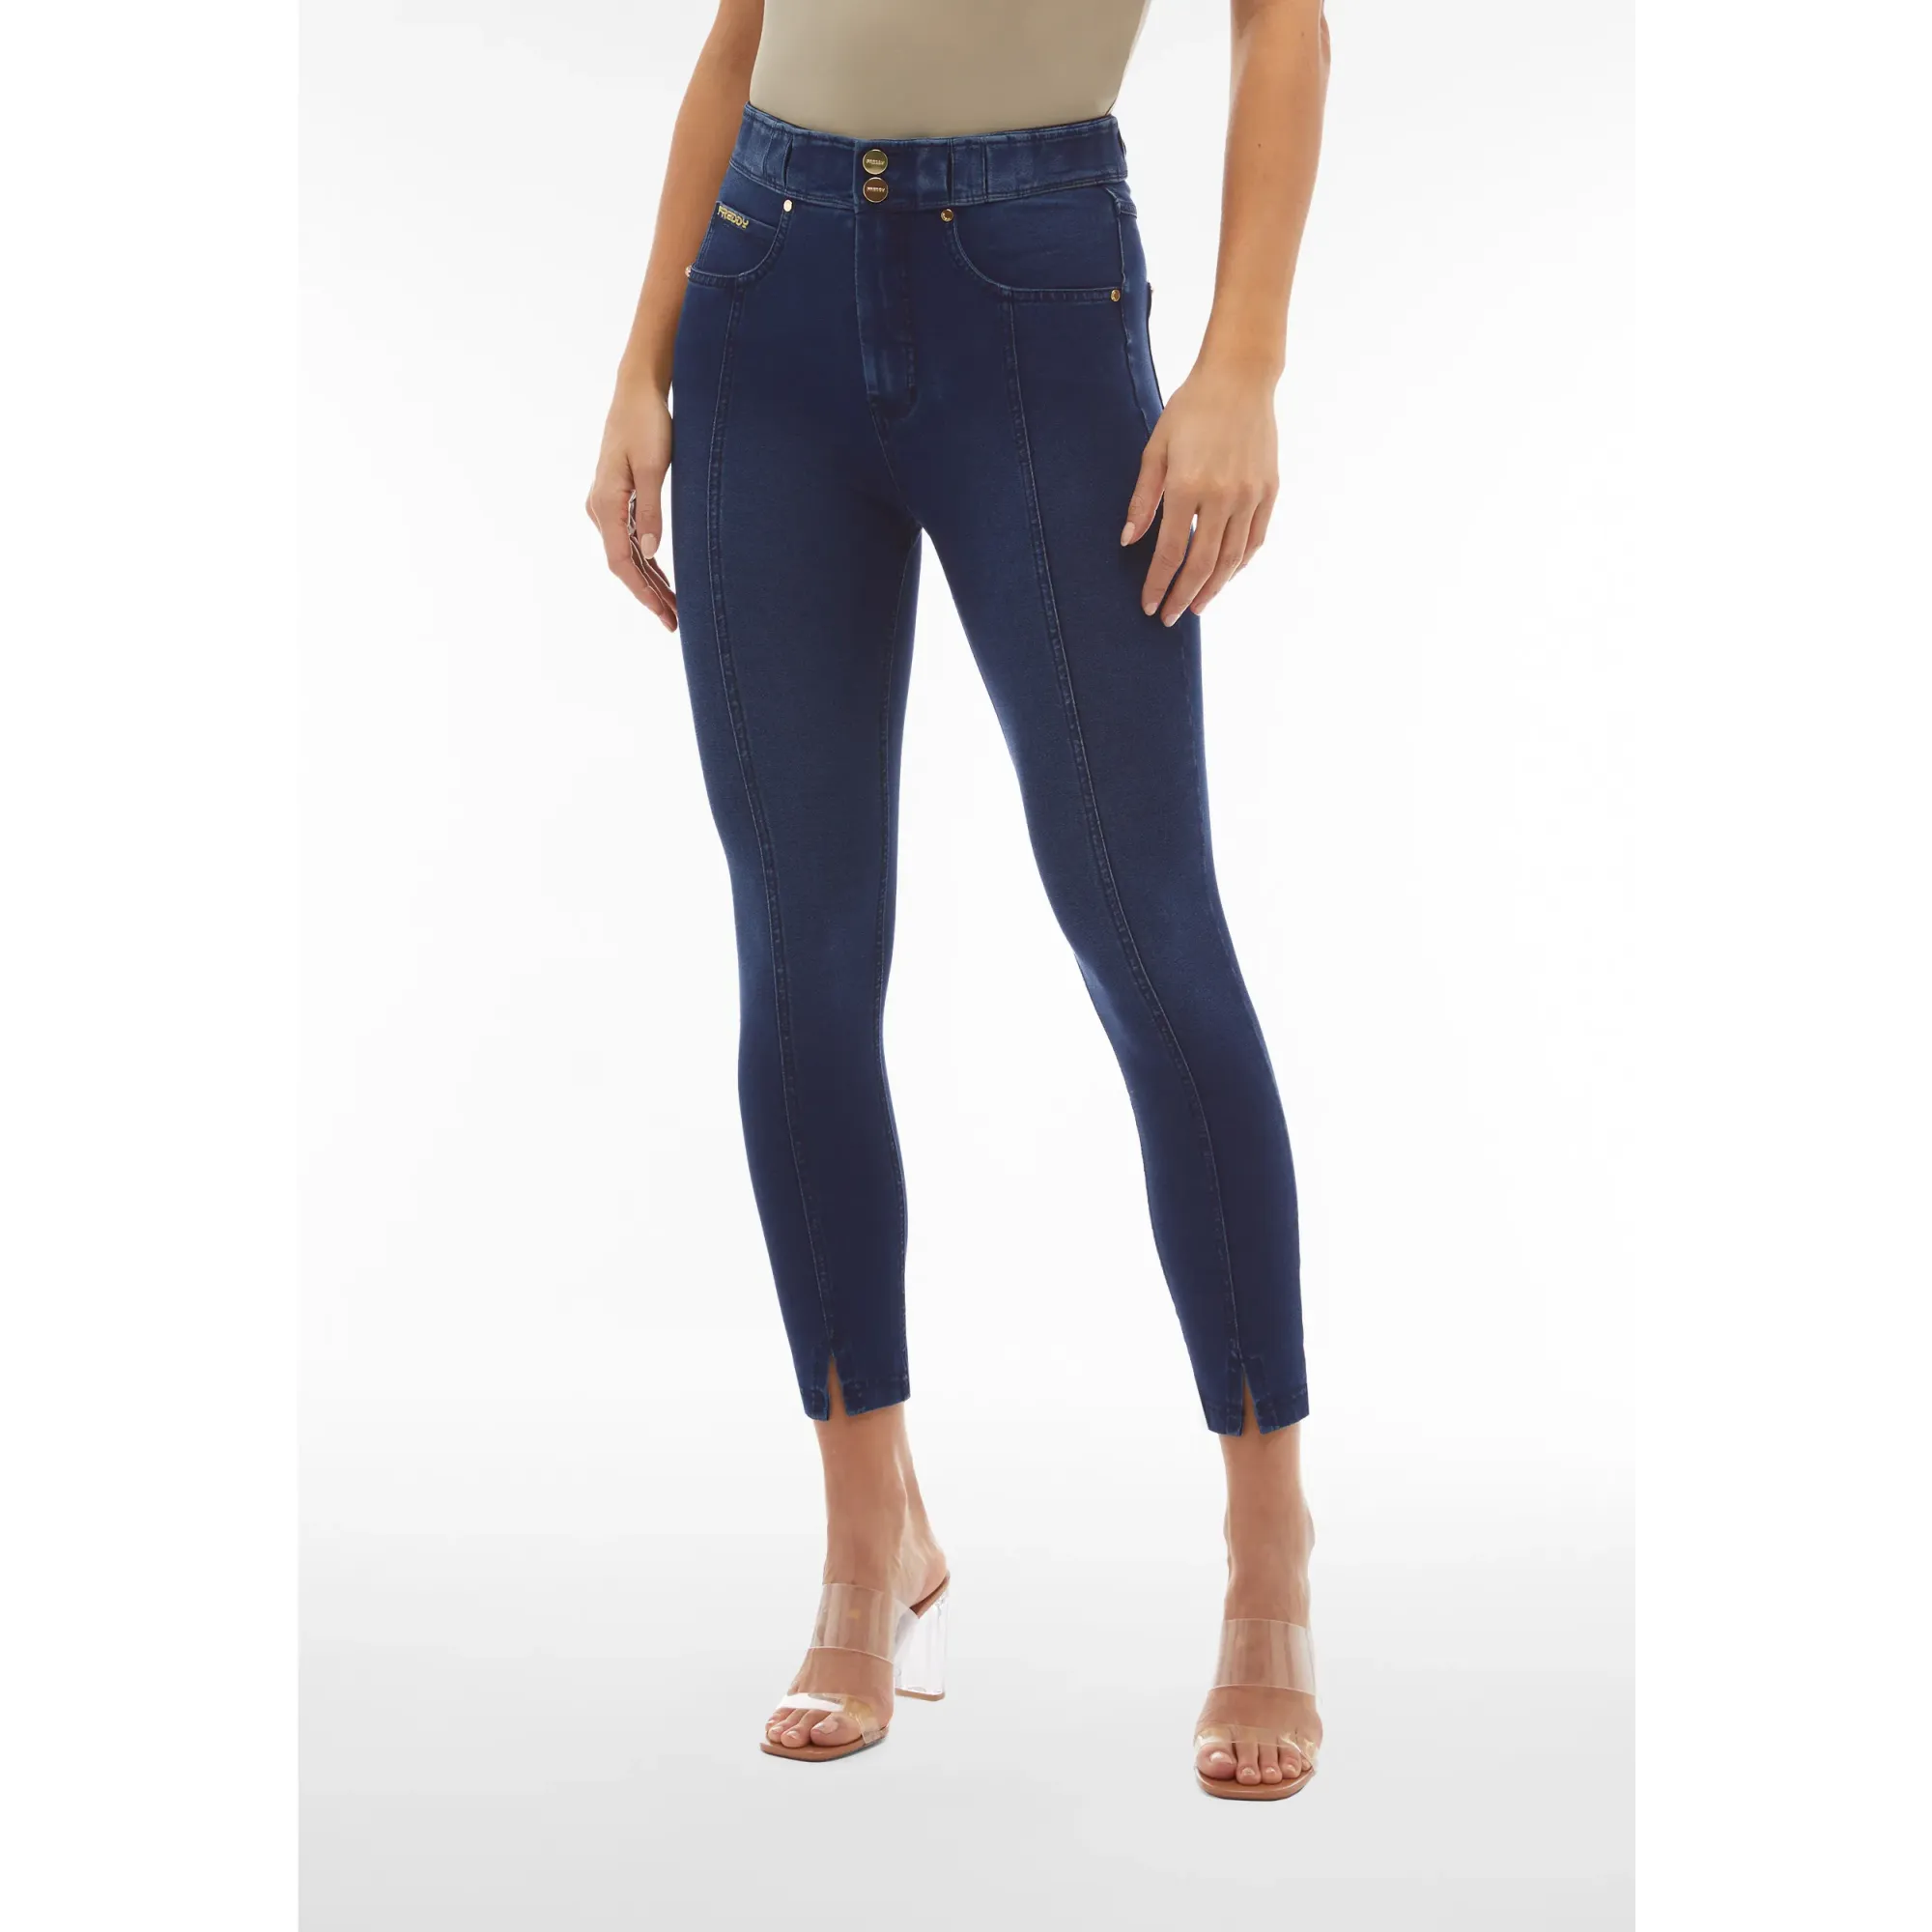 Freddy N.O.W.® Eco Damen Comfort Jeans - 7/8 High Waist Super Skinny - Indigoblau - Blaue Nähte - J0B